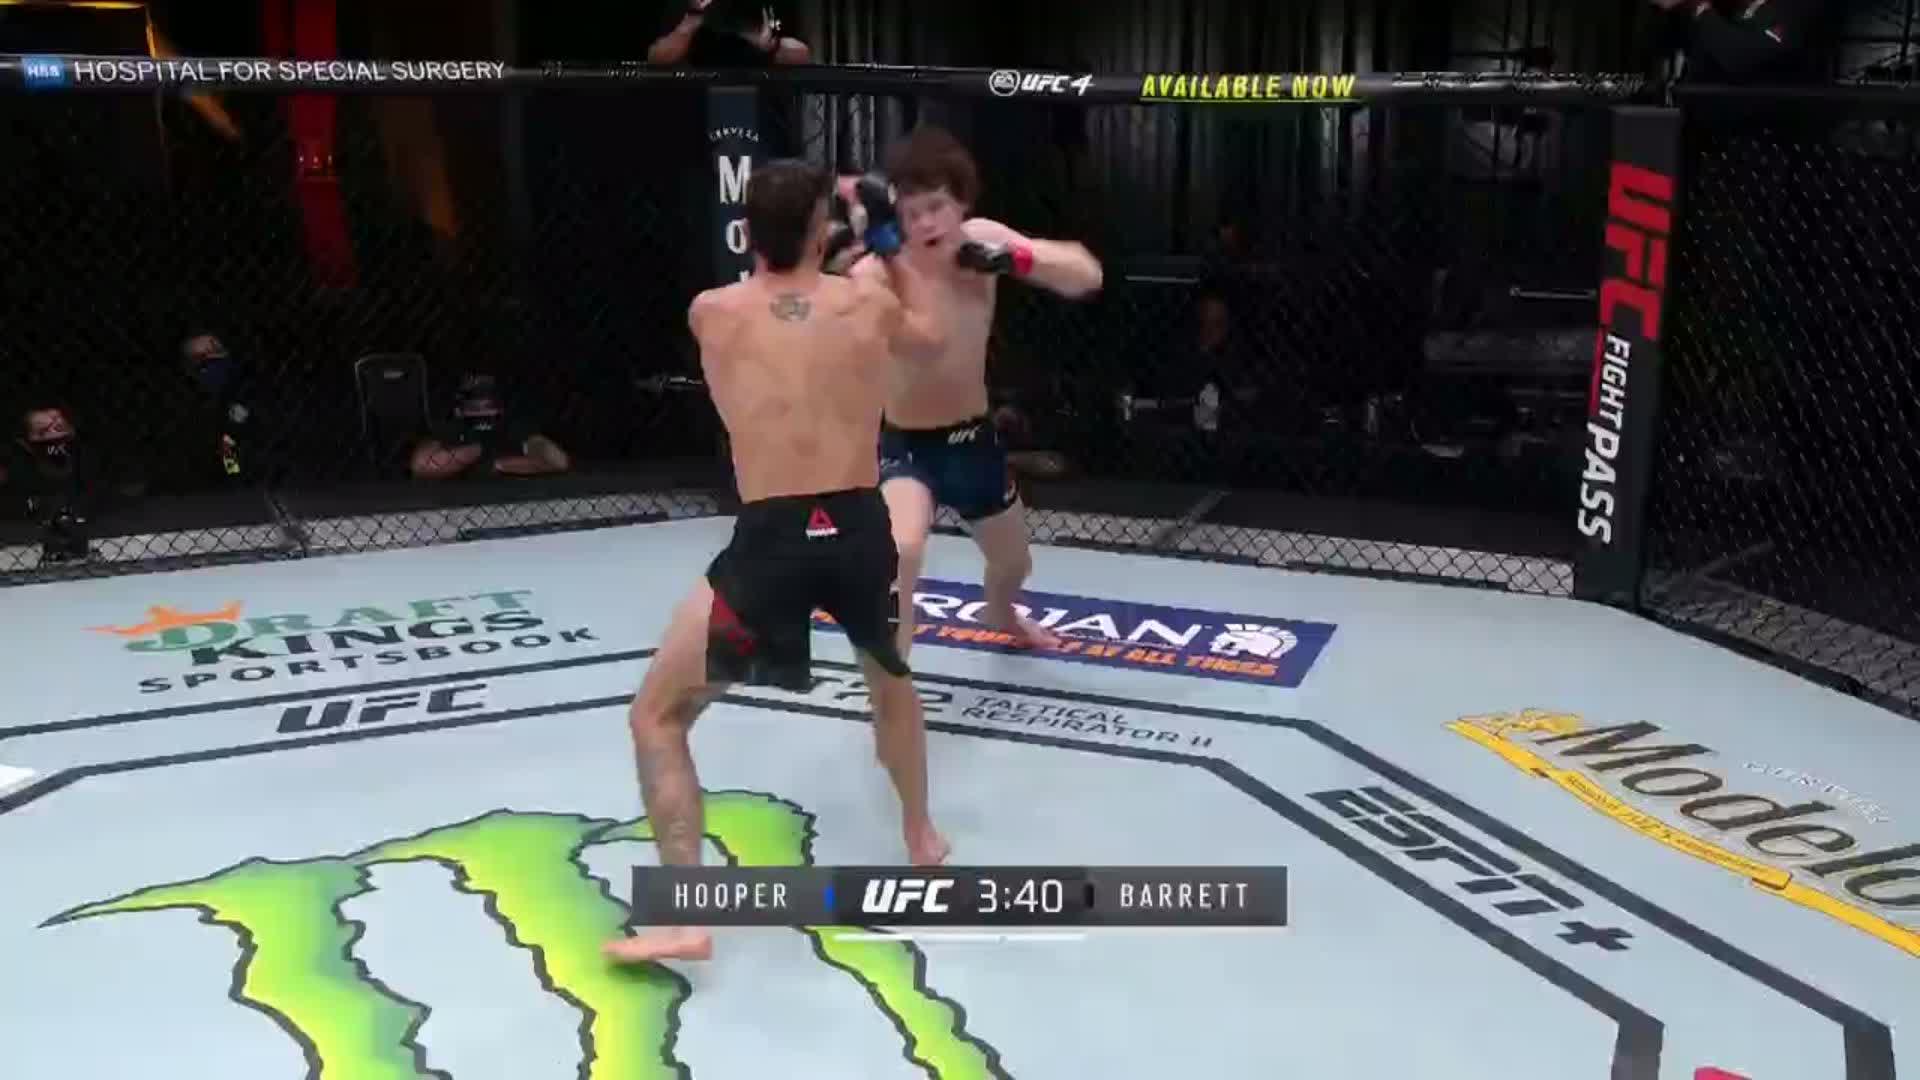 UFC Español on "Interesante manera de la pelea al suelo! #UFC256 https://t.co/WltxKVe2tX" / Twitter